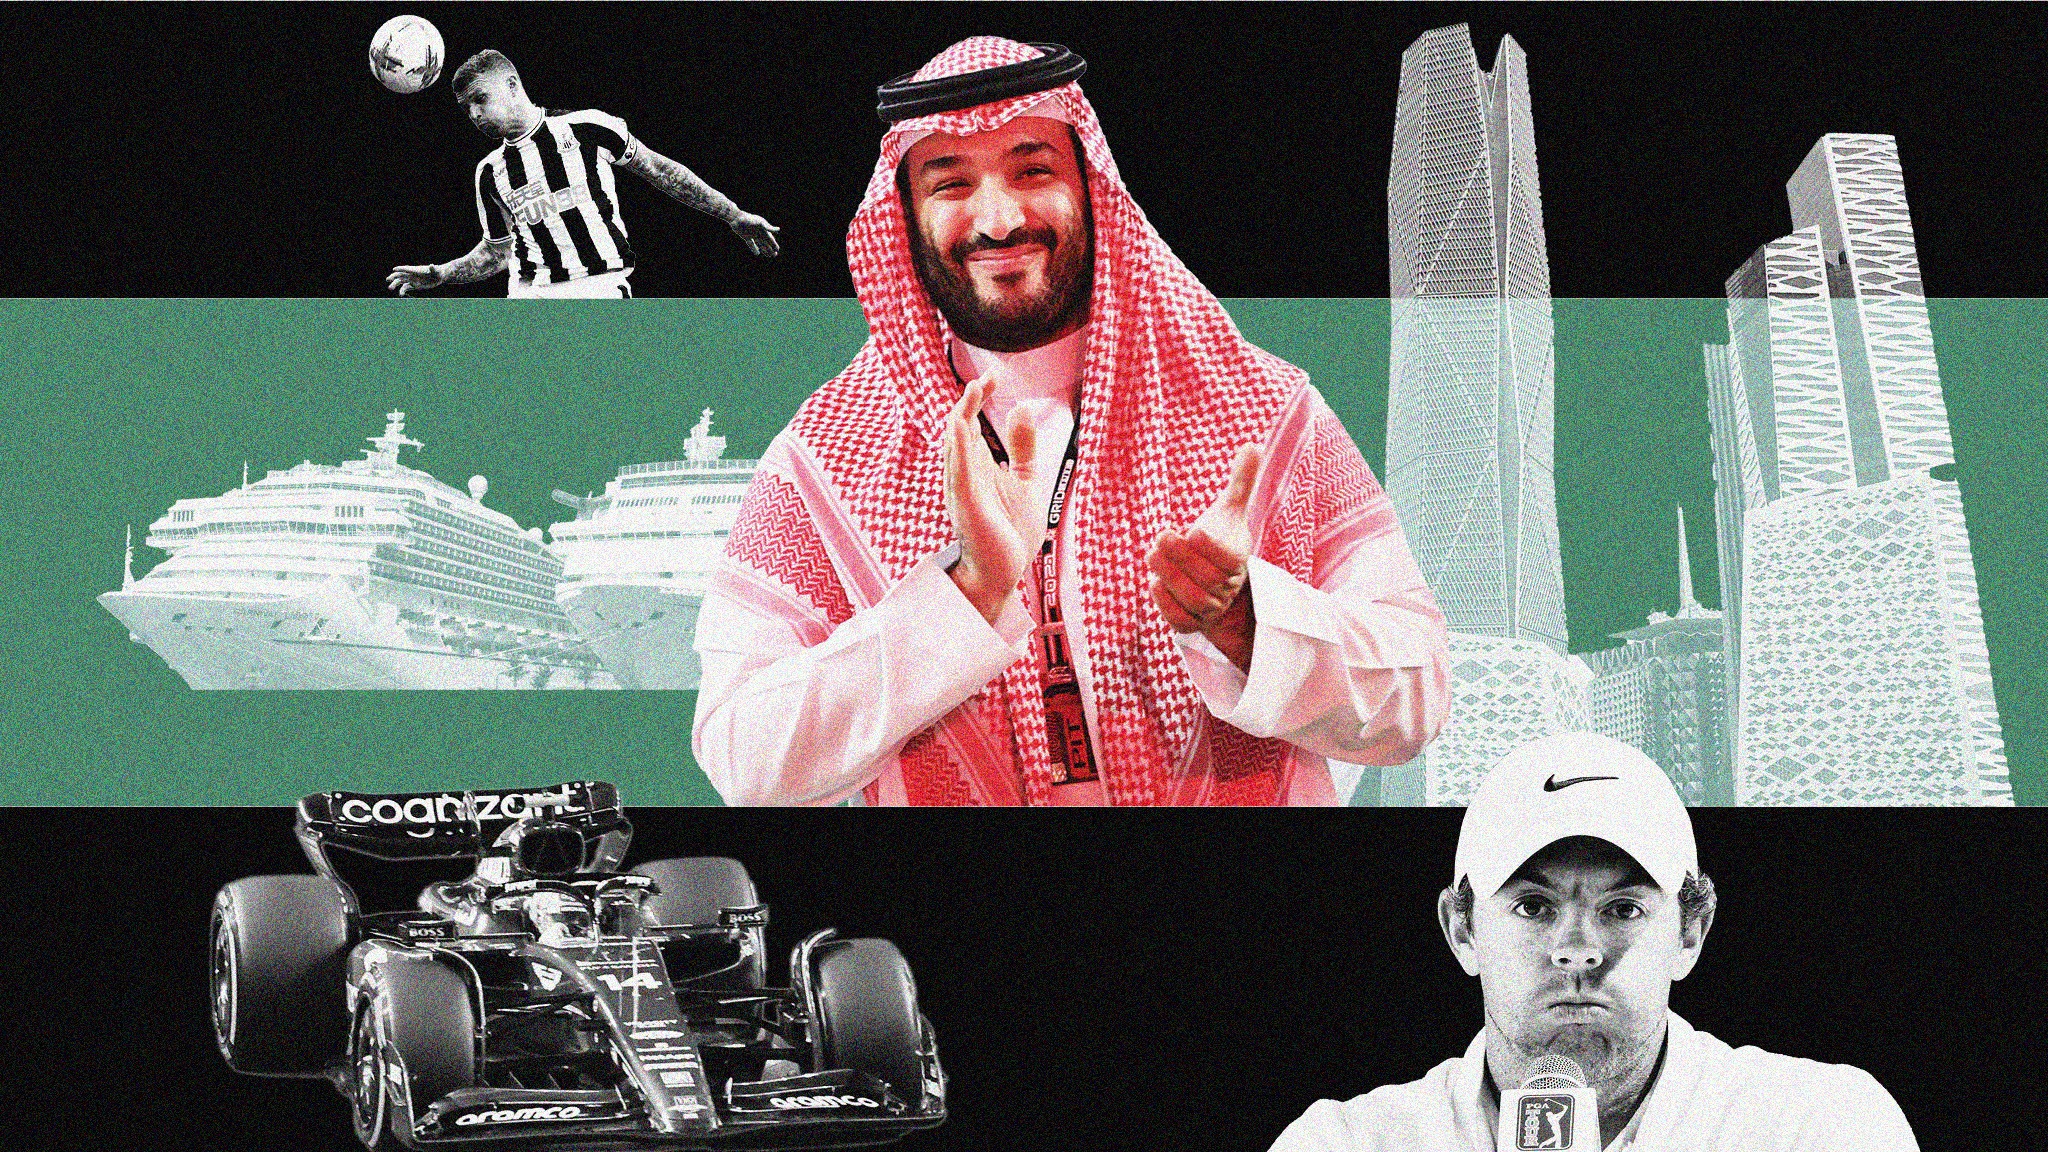 ft.com - Samer Al-Atrush - Saudi Arabia's billions are shaking up golf. What next?